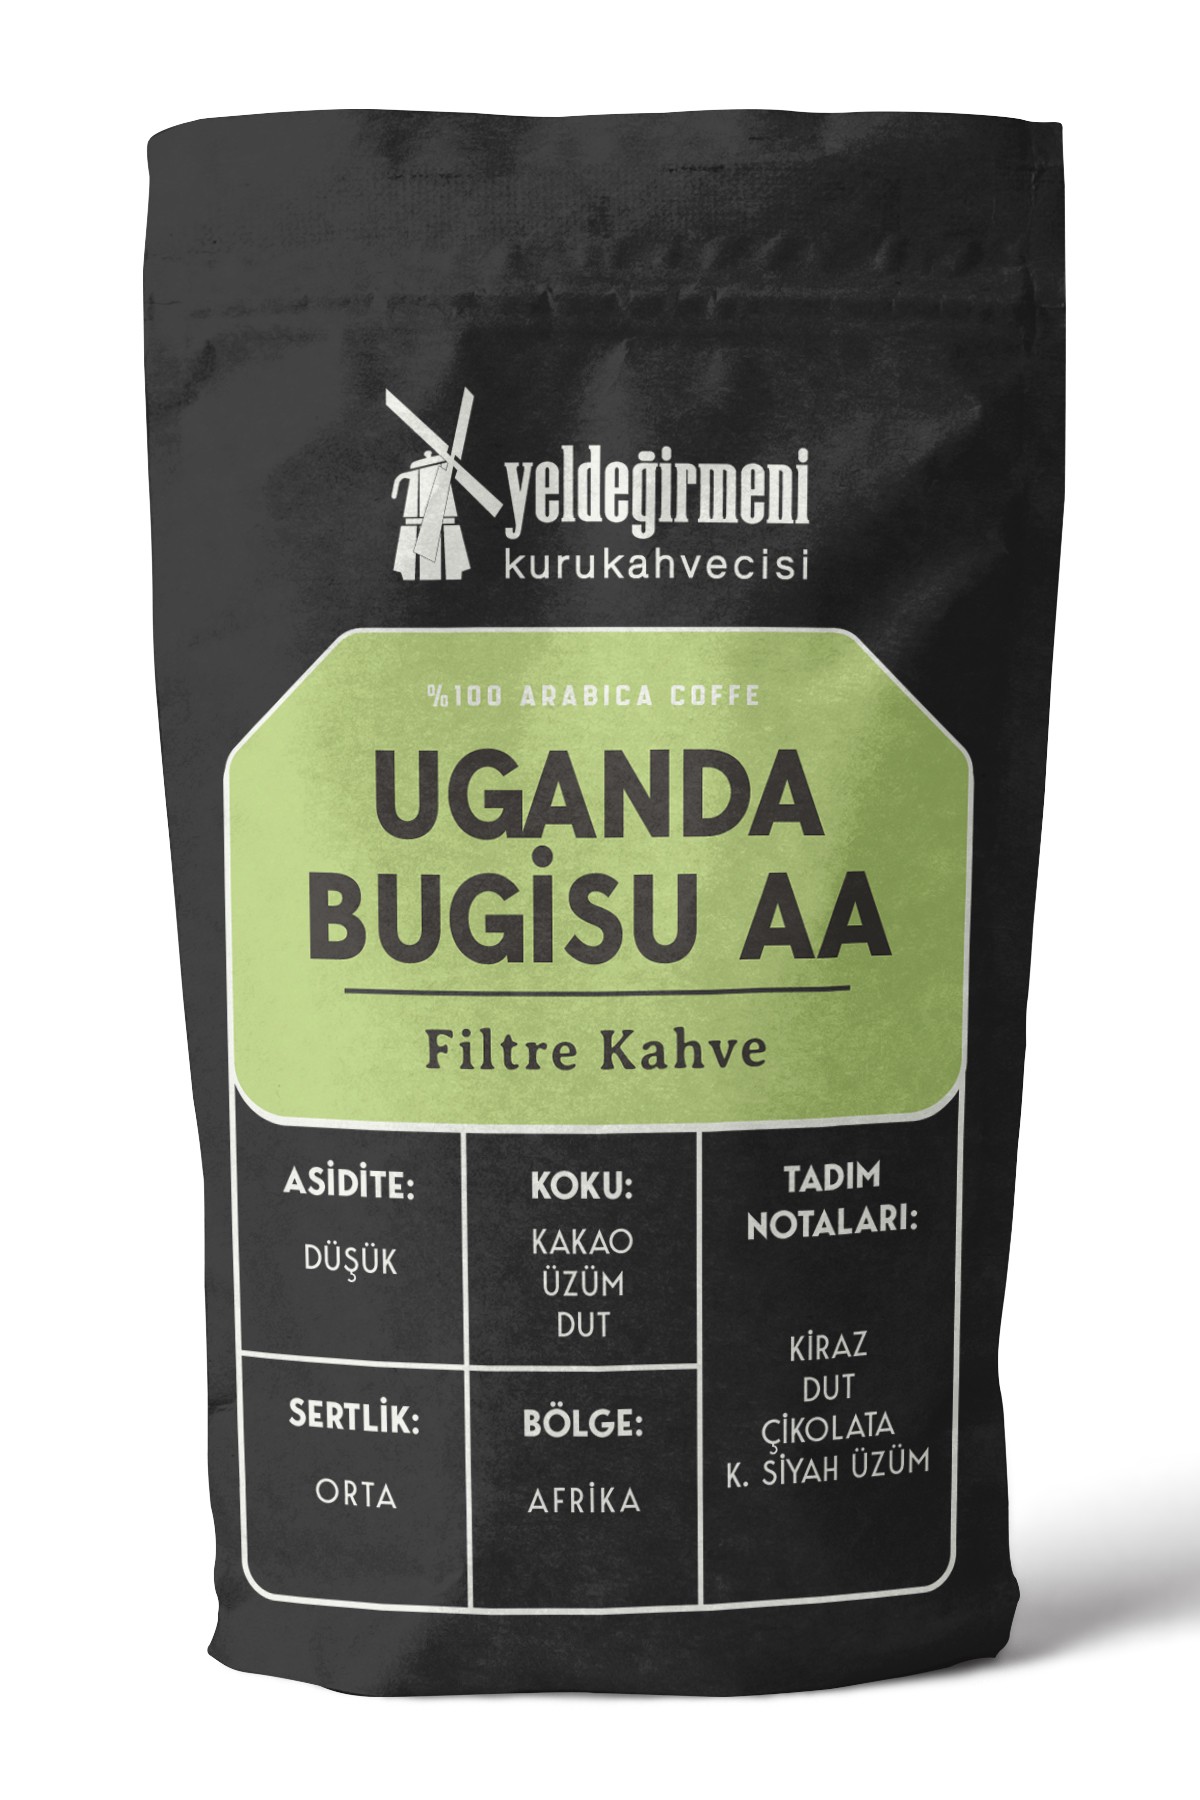 Uganda Bugisu AA Filtre Kahve